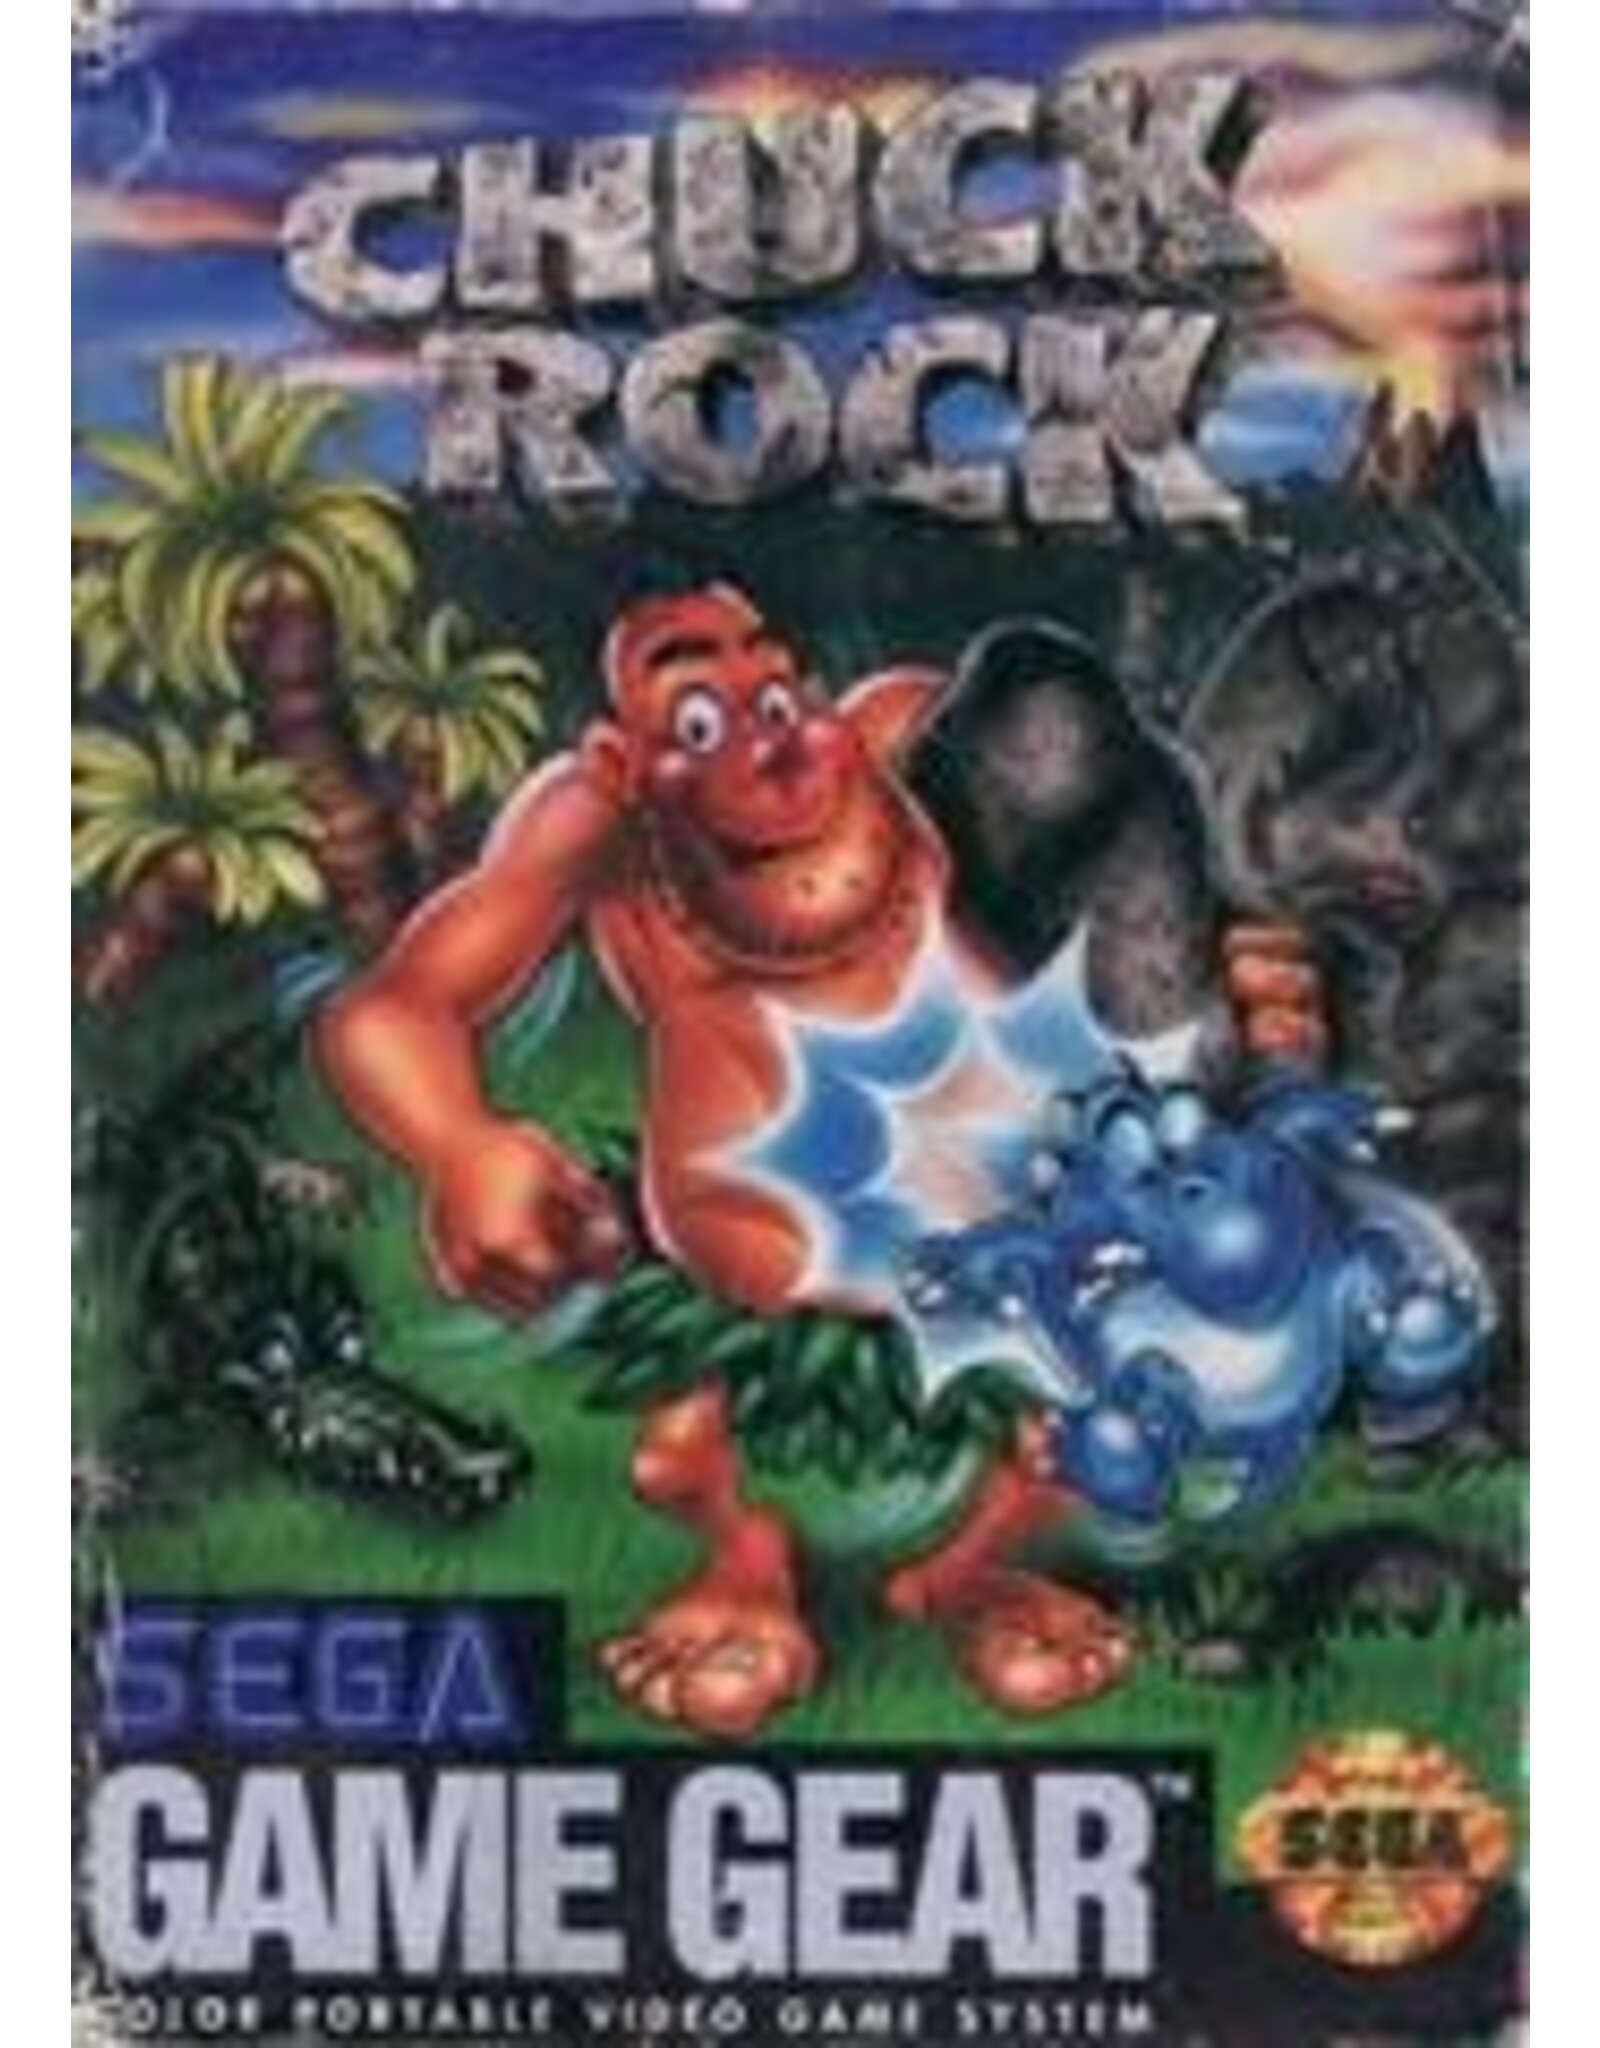 Sega Game Gear Chuck Rock (Cart Only)